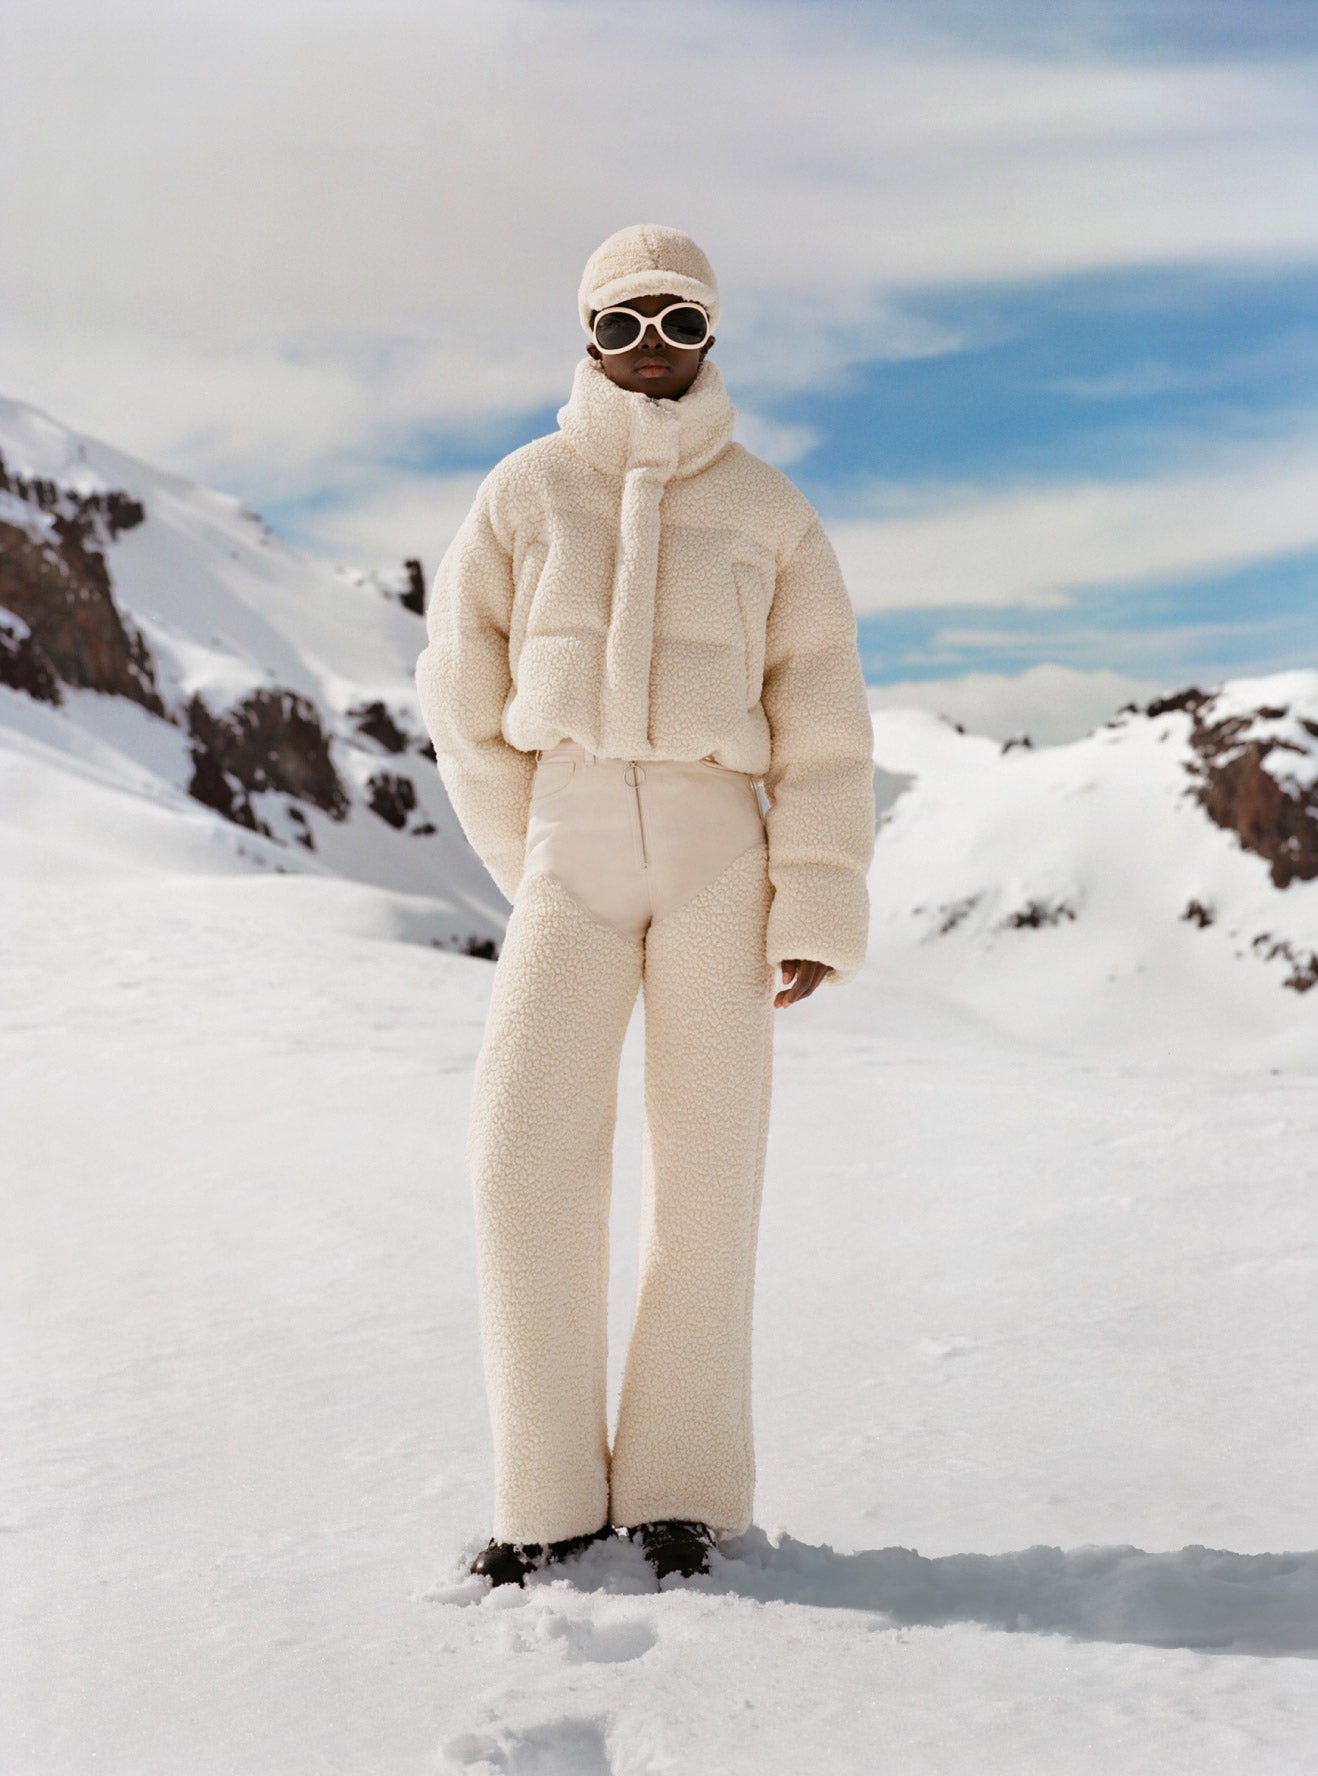 Designer ski wear boutique - Women's ski jackets, clothes and skiwear.